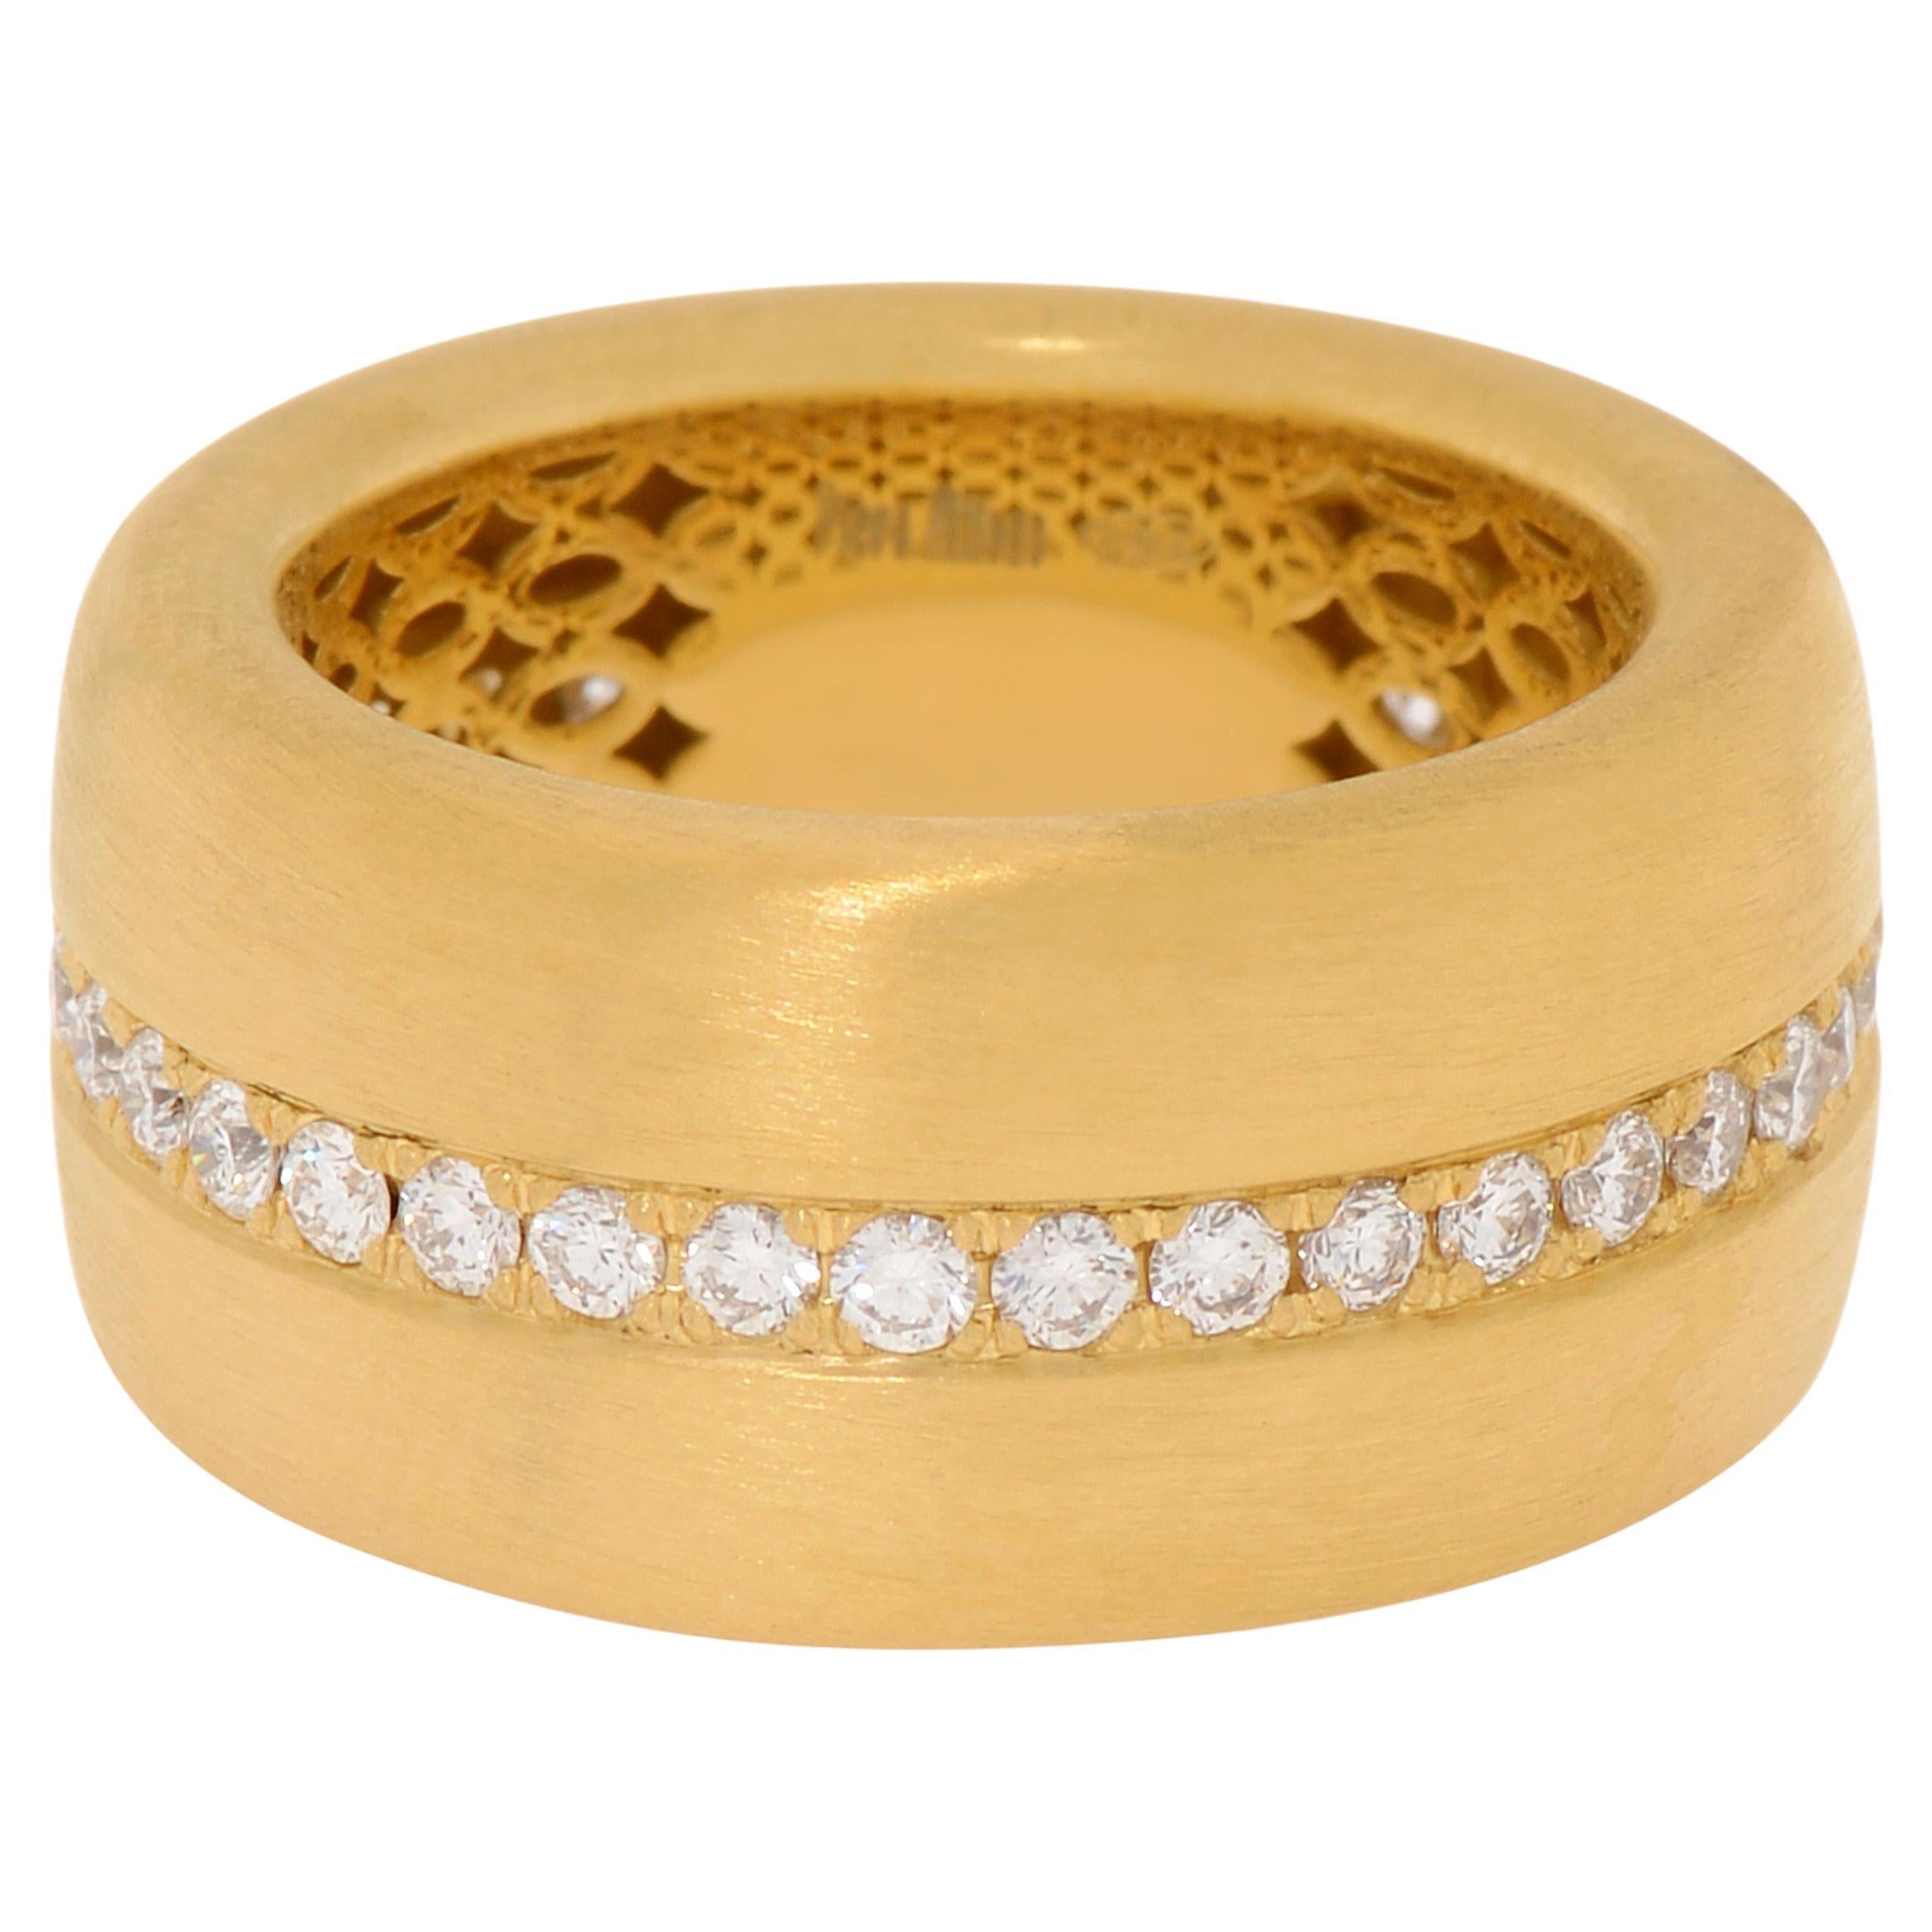 Piero Milano 18K Yellow Gold Diamond Ring Sz 7.25